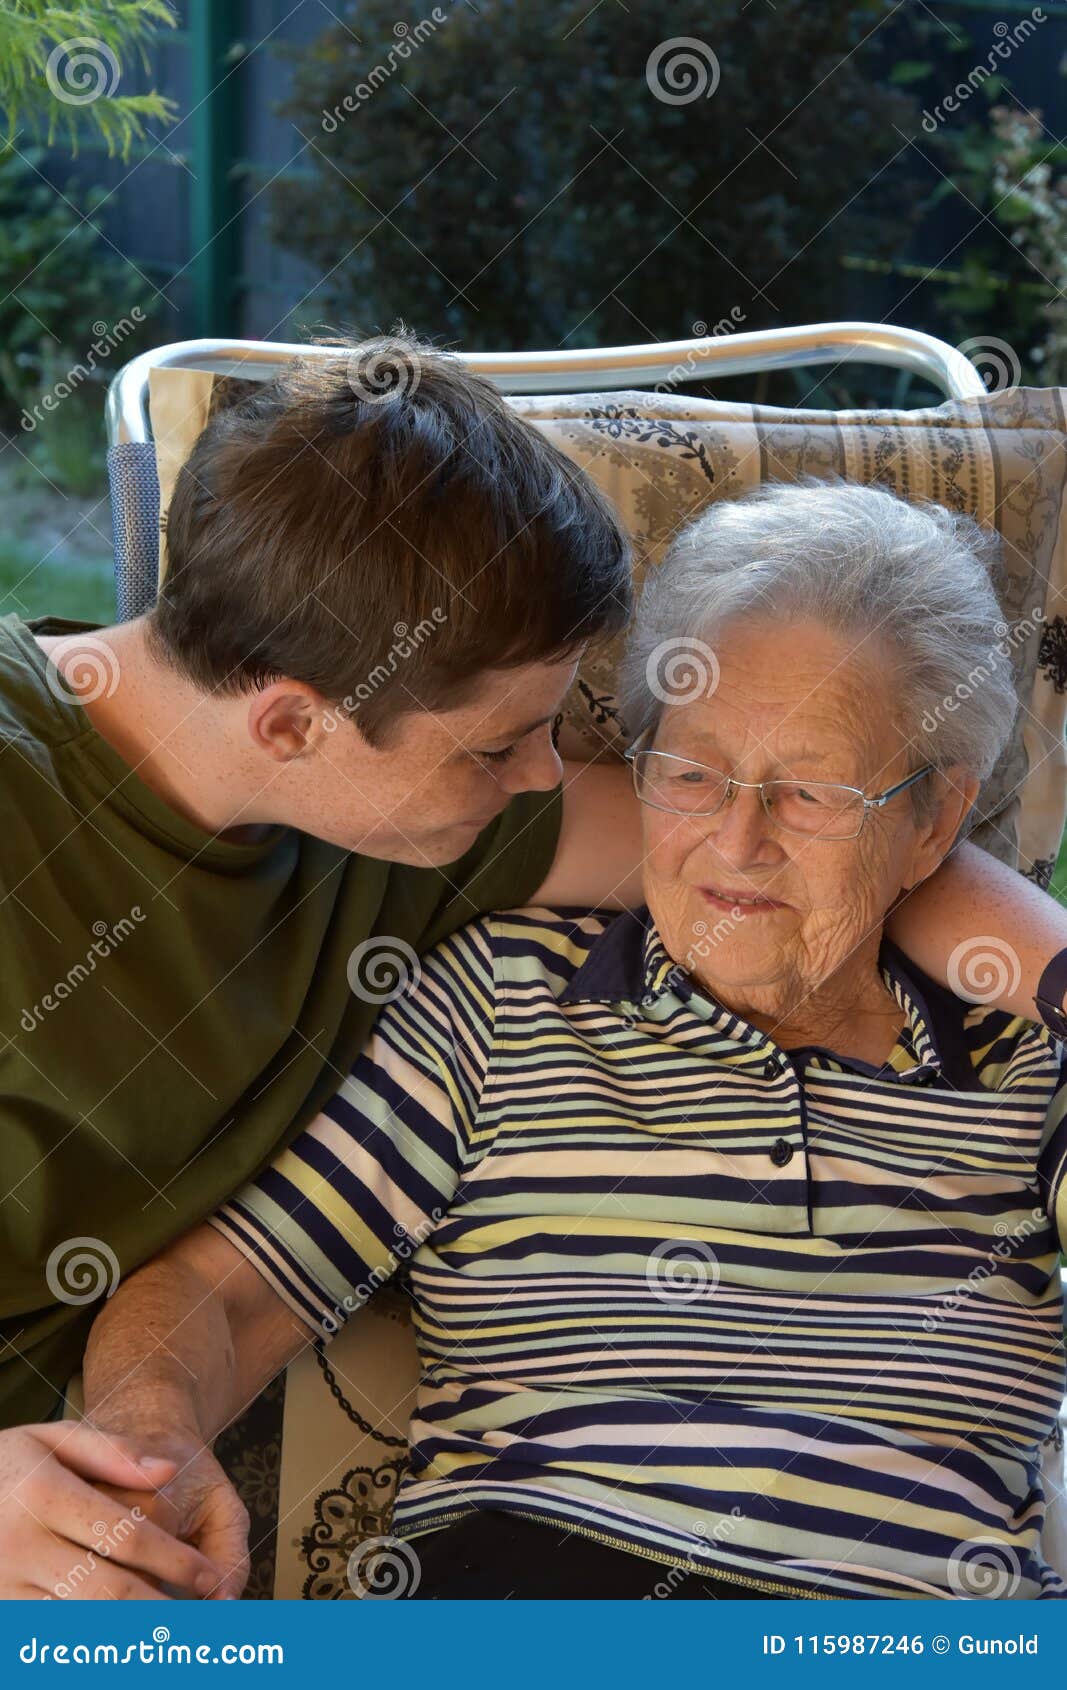 Granny and boy